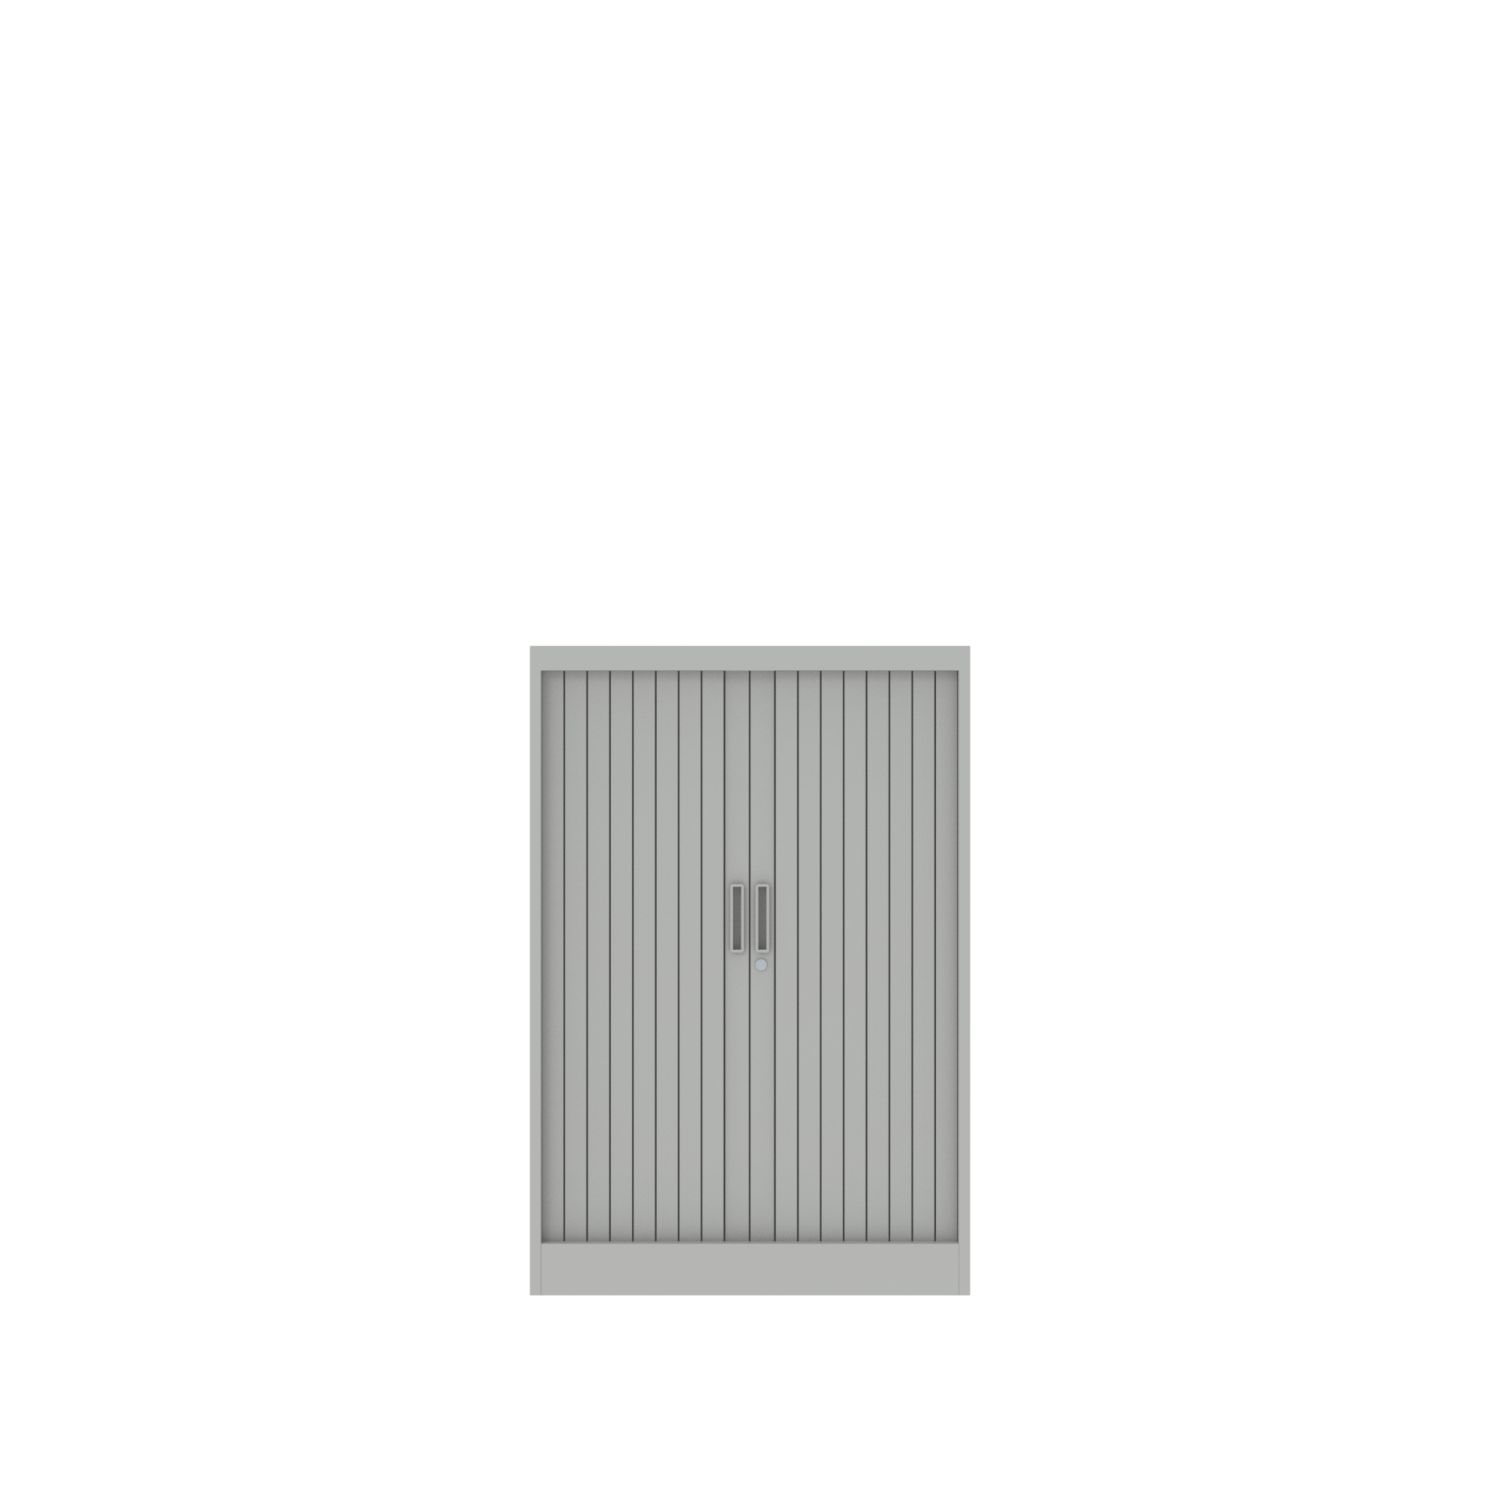 lensvelt design team tambour cabinet 80 cm 45 cm x 118 cm high base 2 shelves light grey ral7035